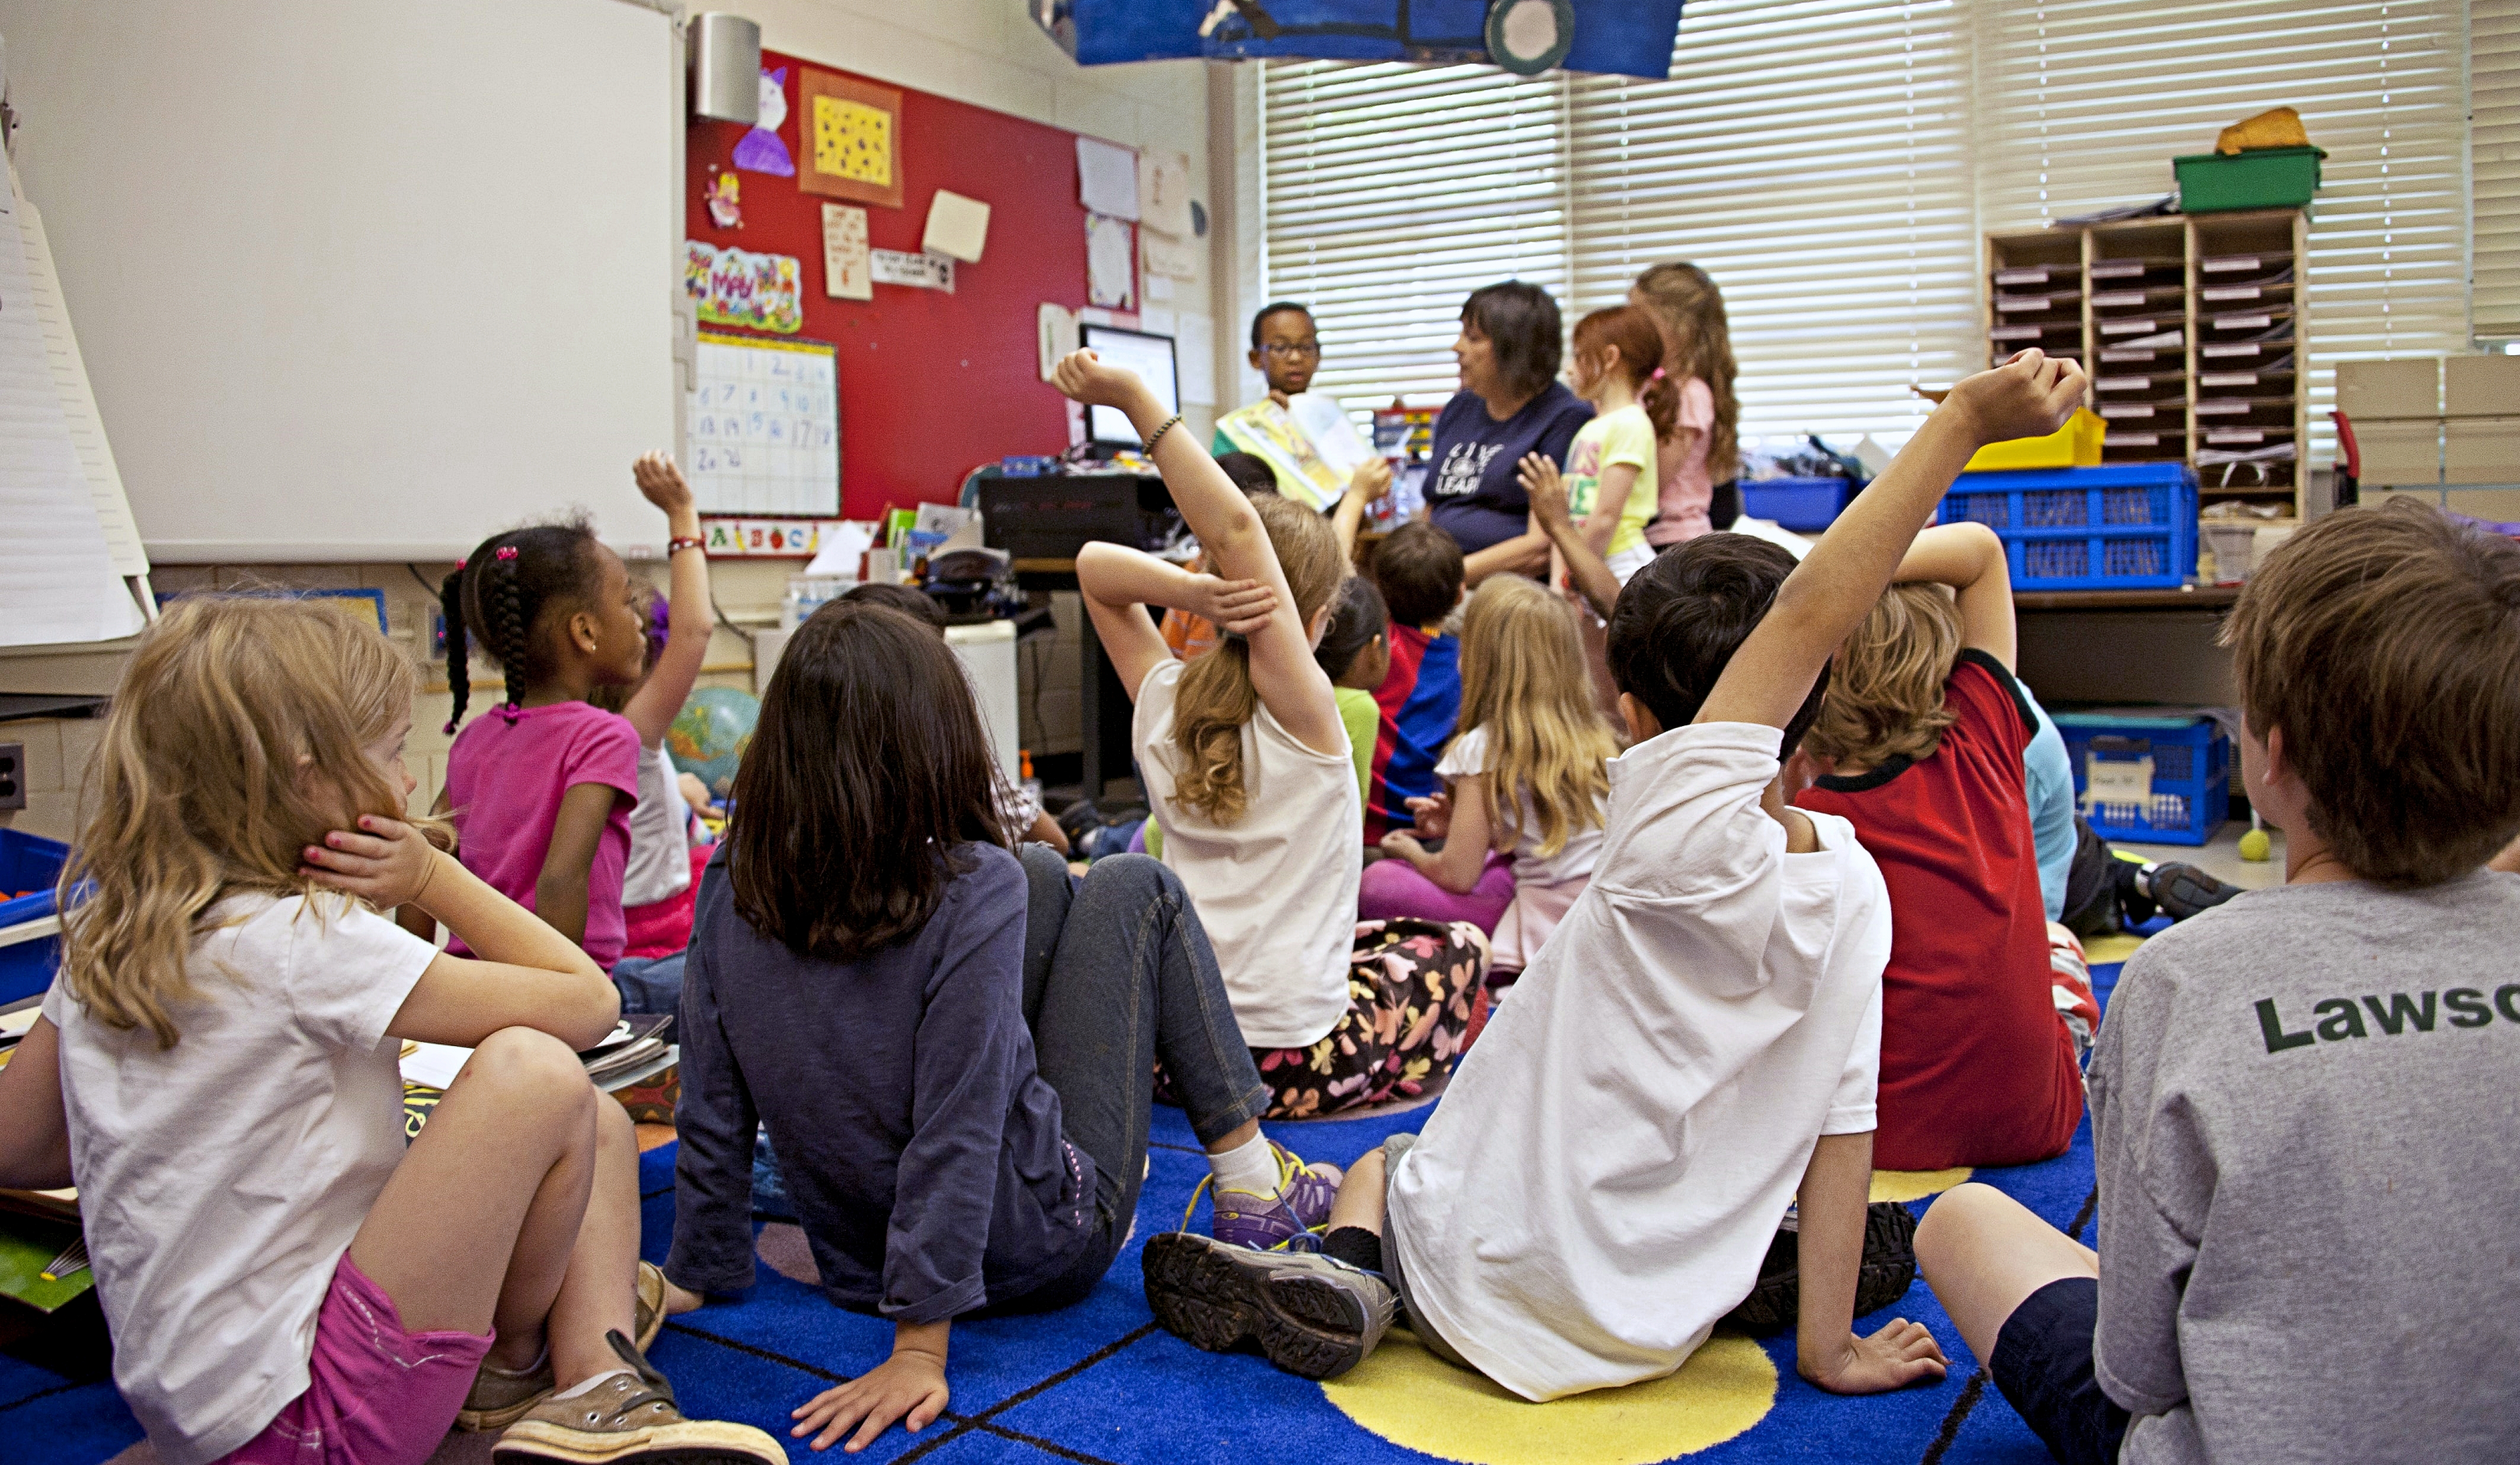 Children sit on the floor in front of a teacher